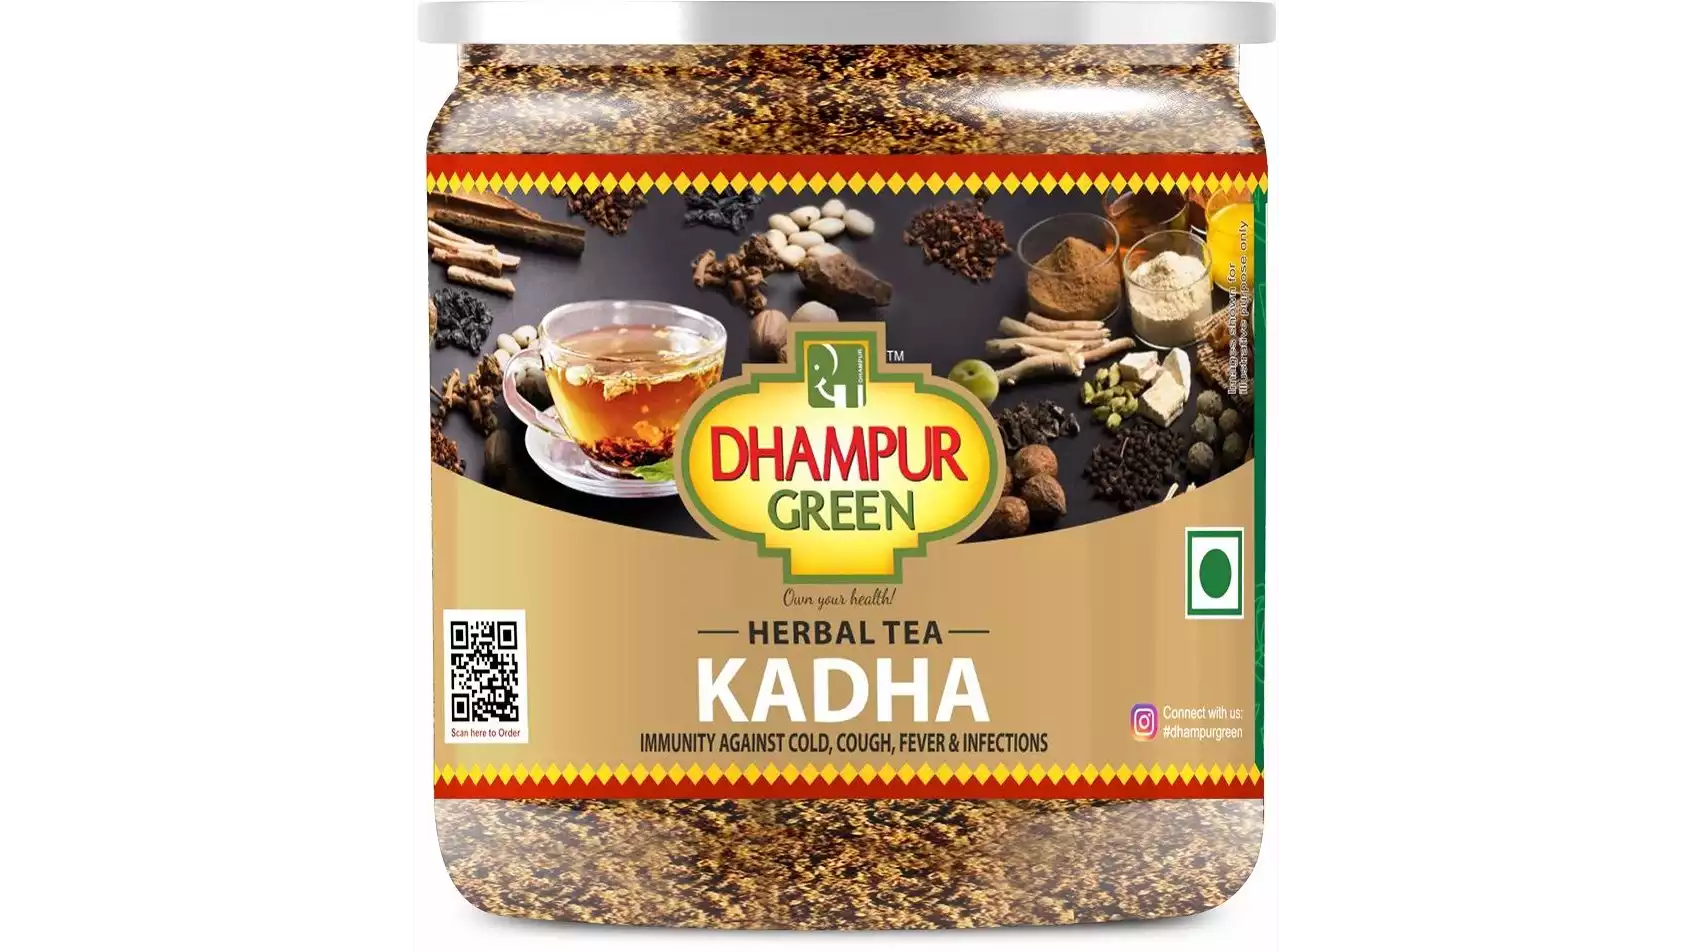 Dhampur Green Kadha Herbal Tea (250g)